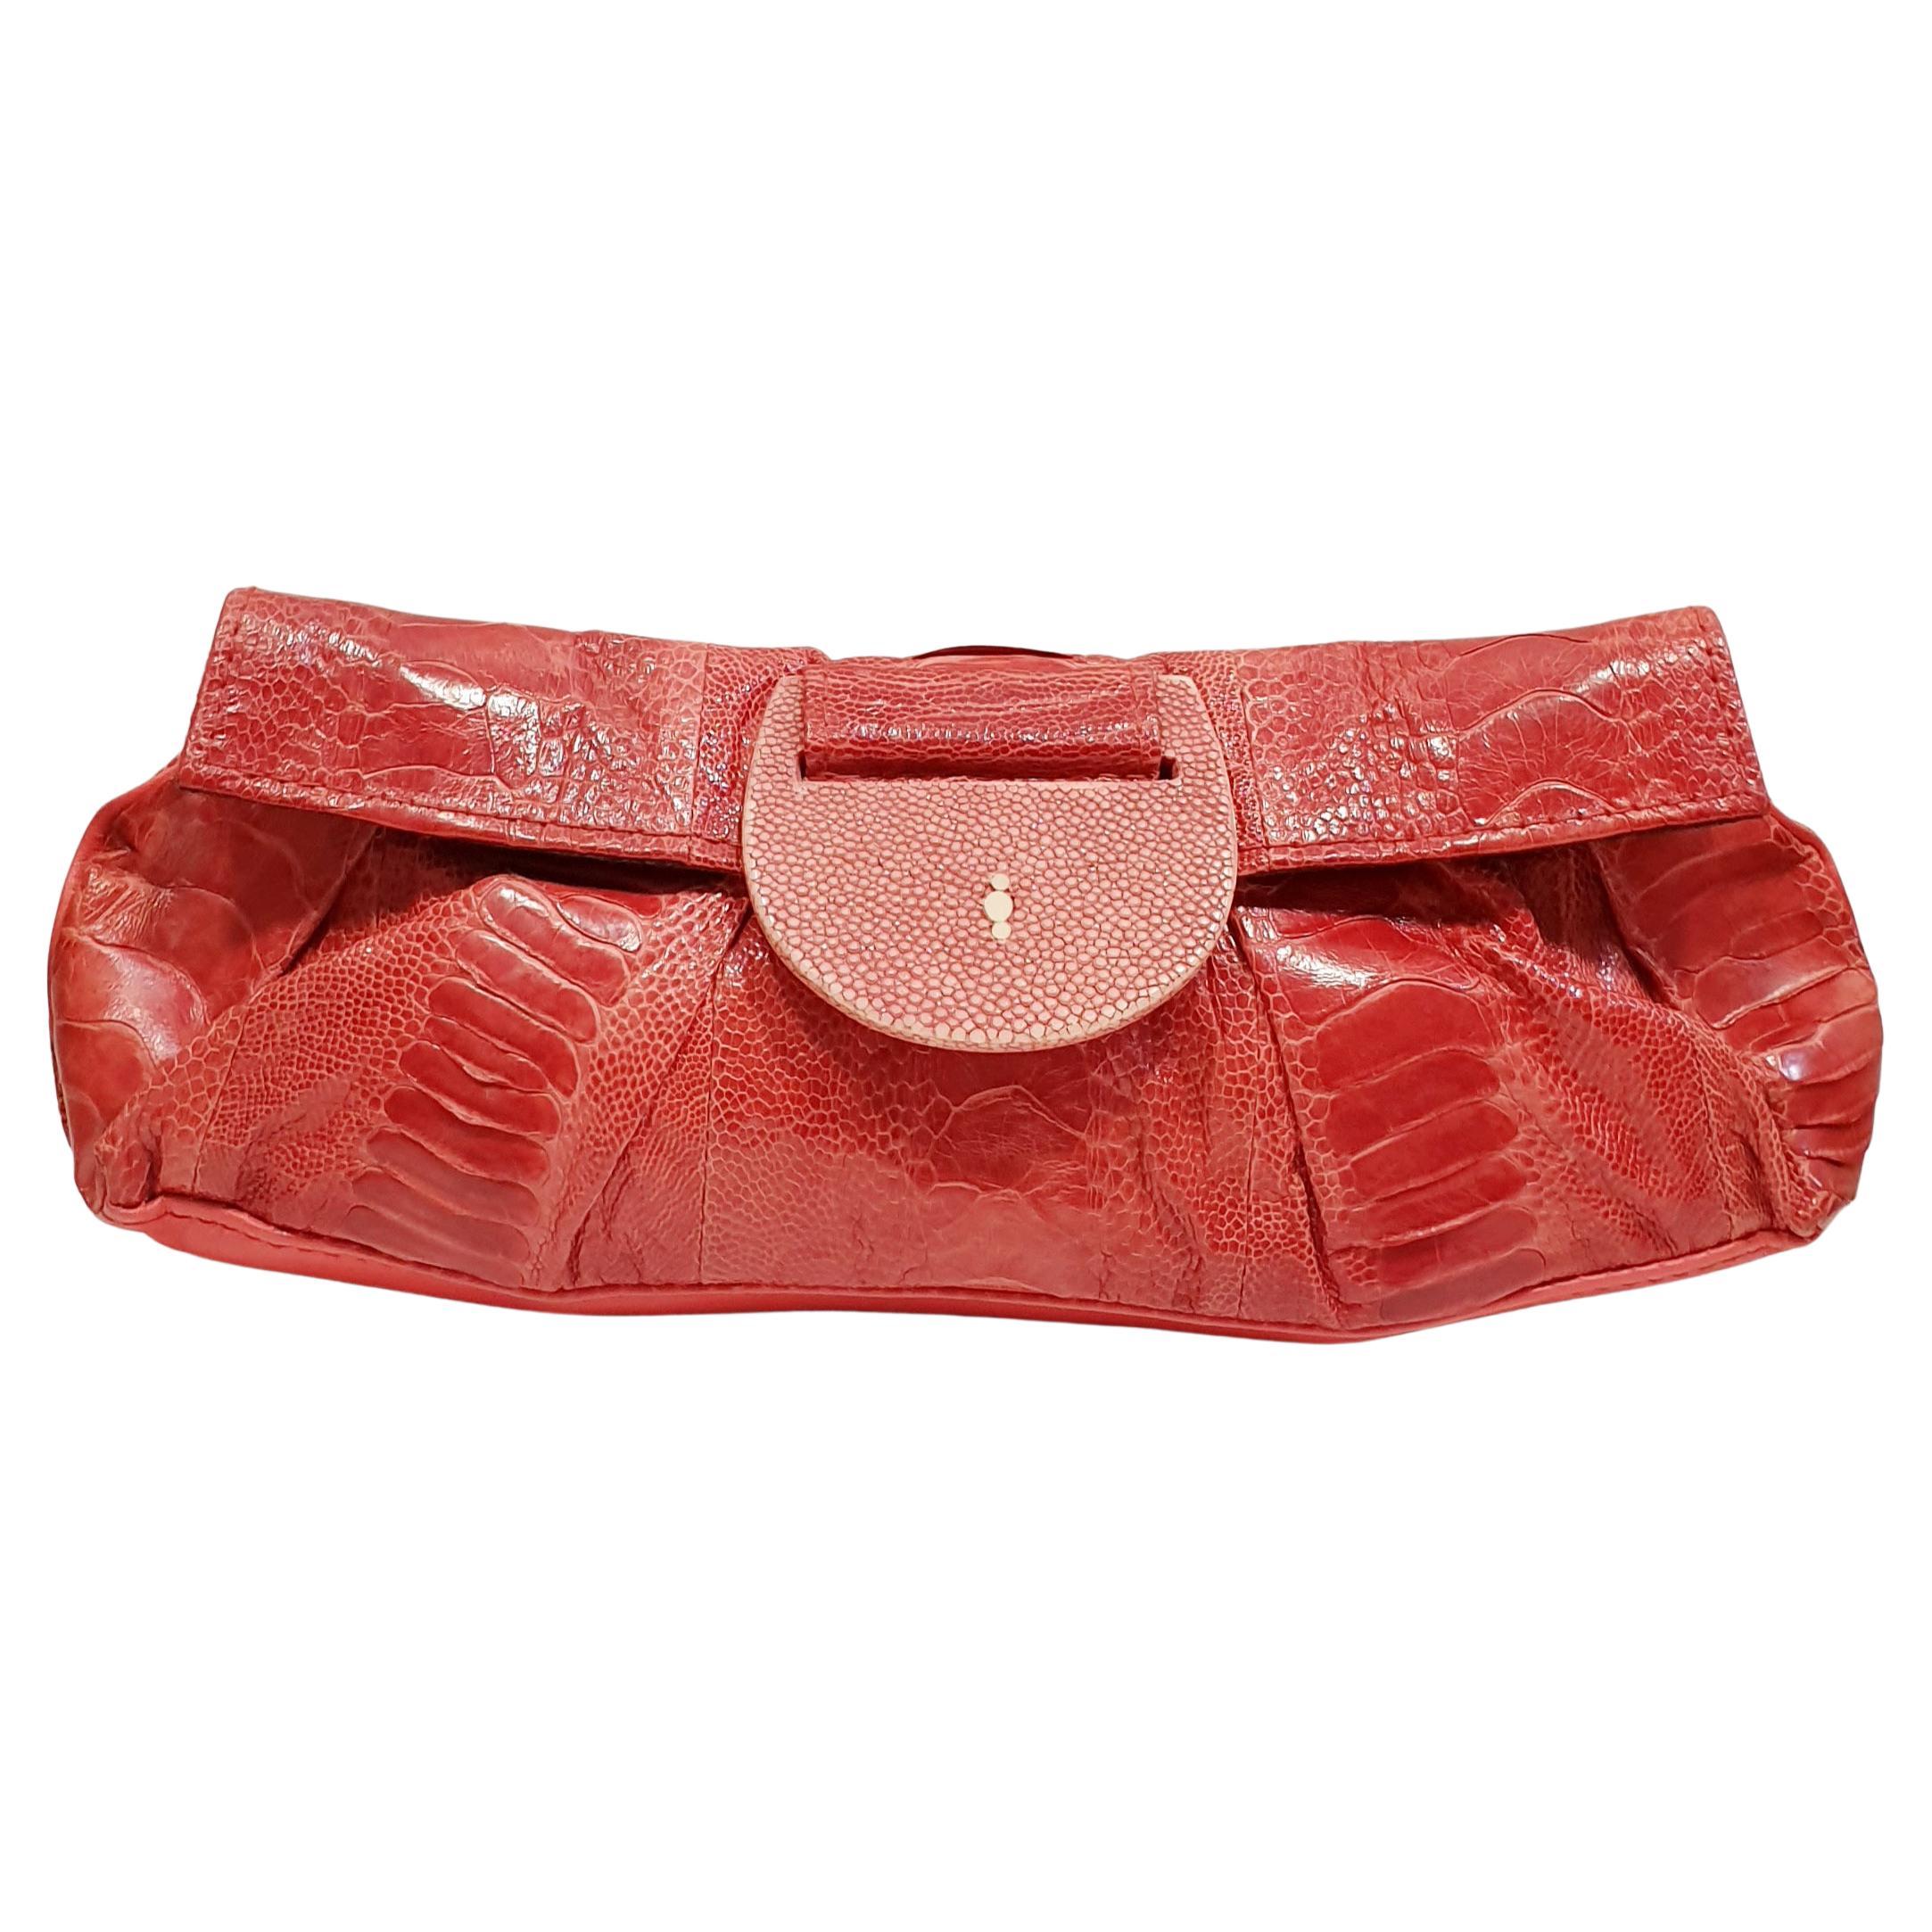 R & Y Augousti Cranberry  Python Leather Stingray Clutch Bag